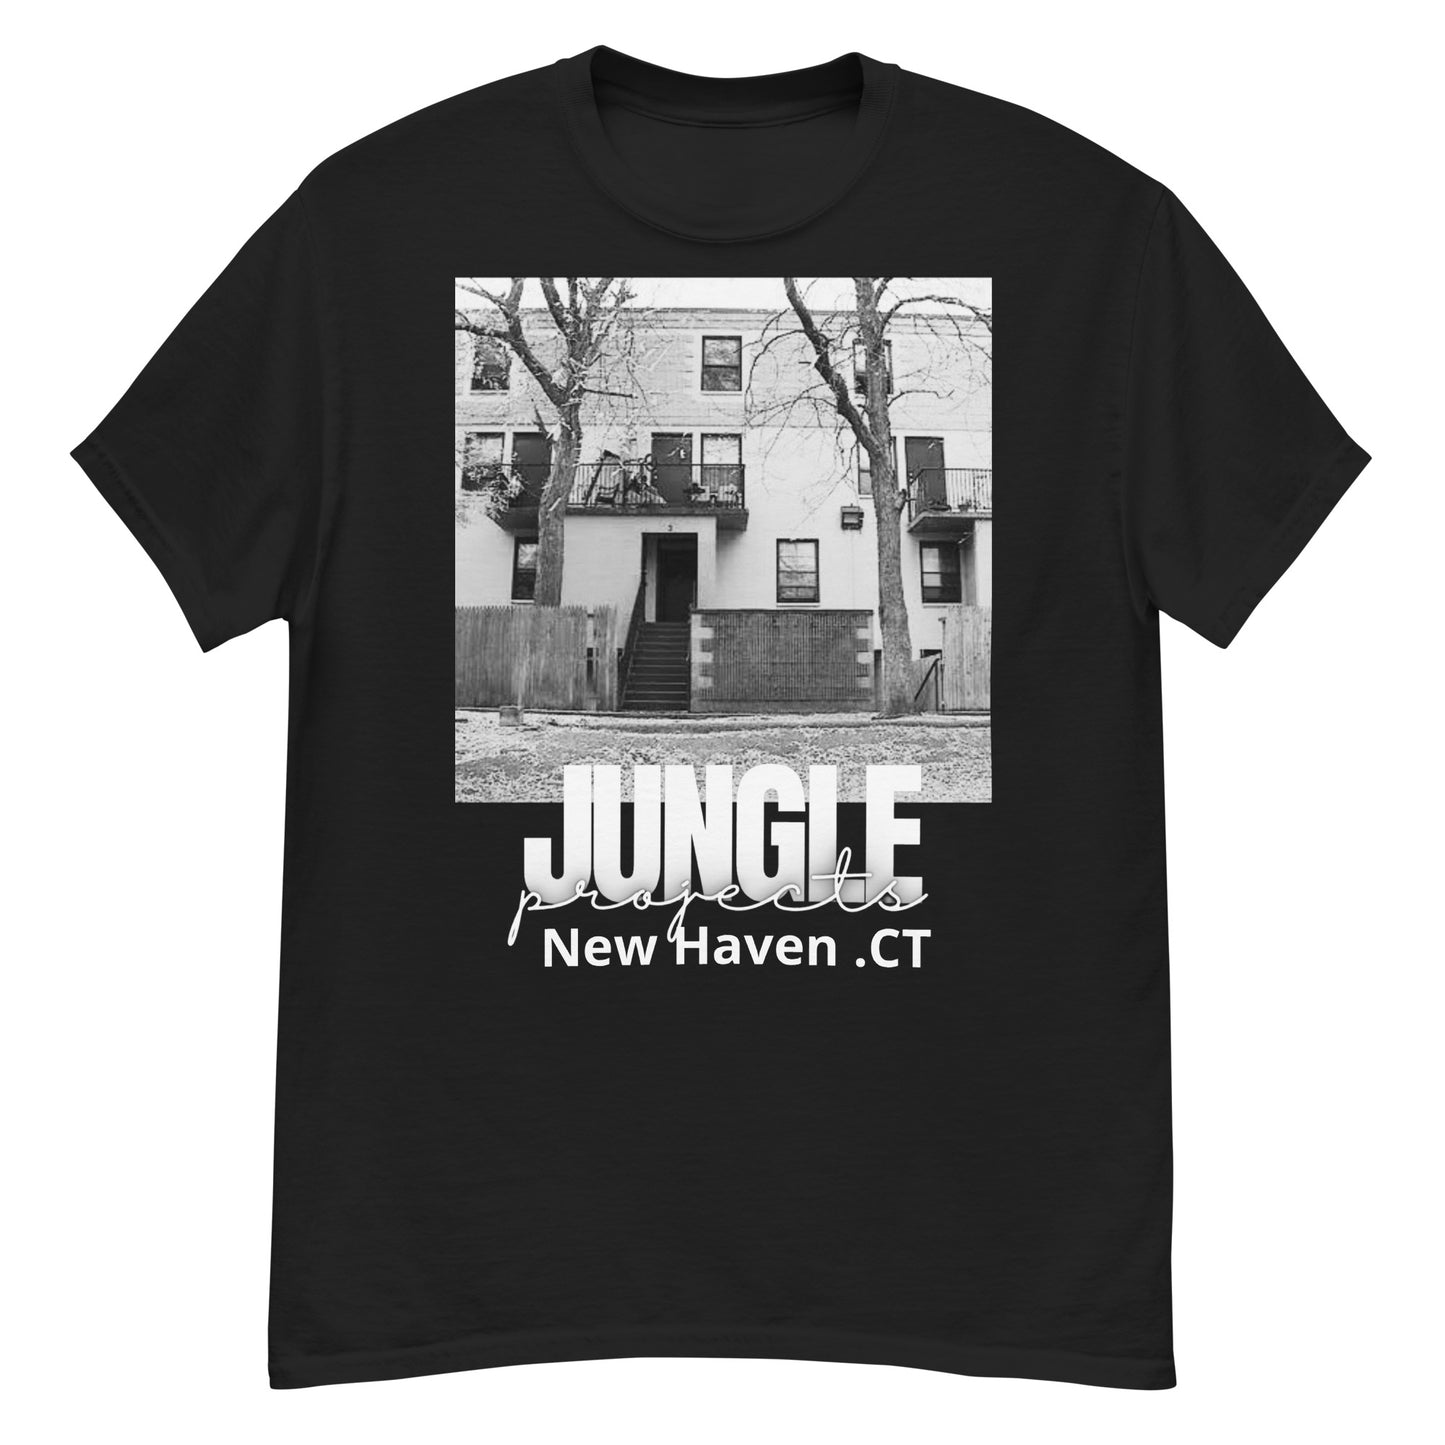 Jungle classic tee